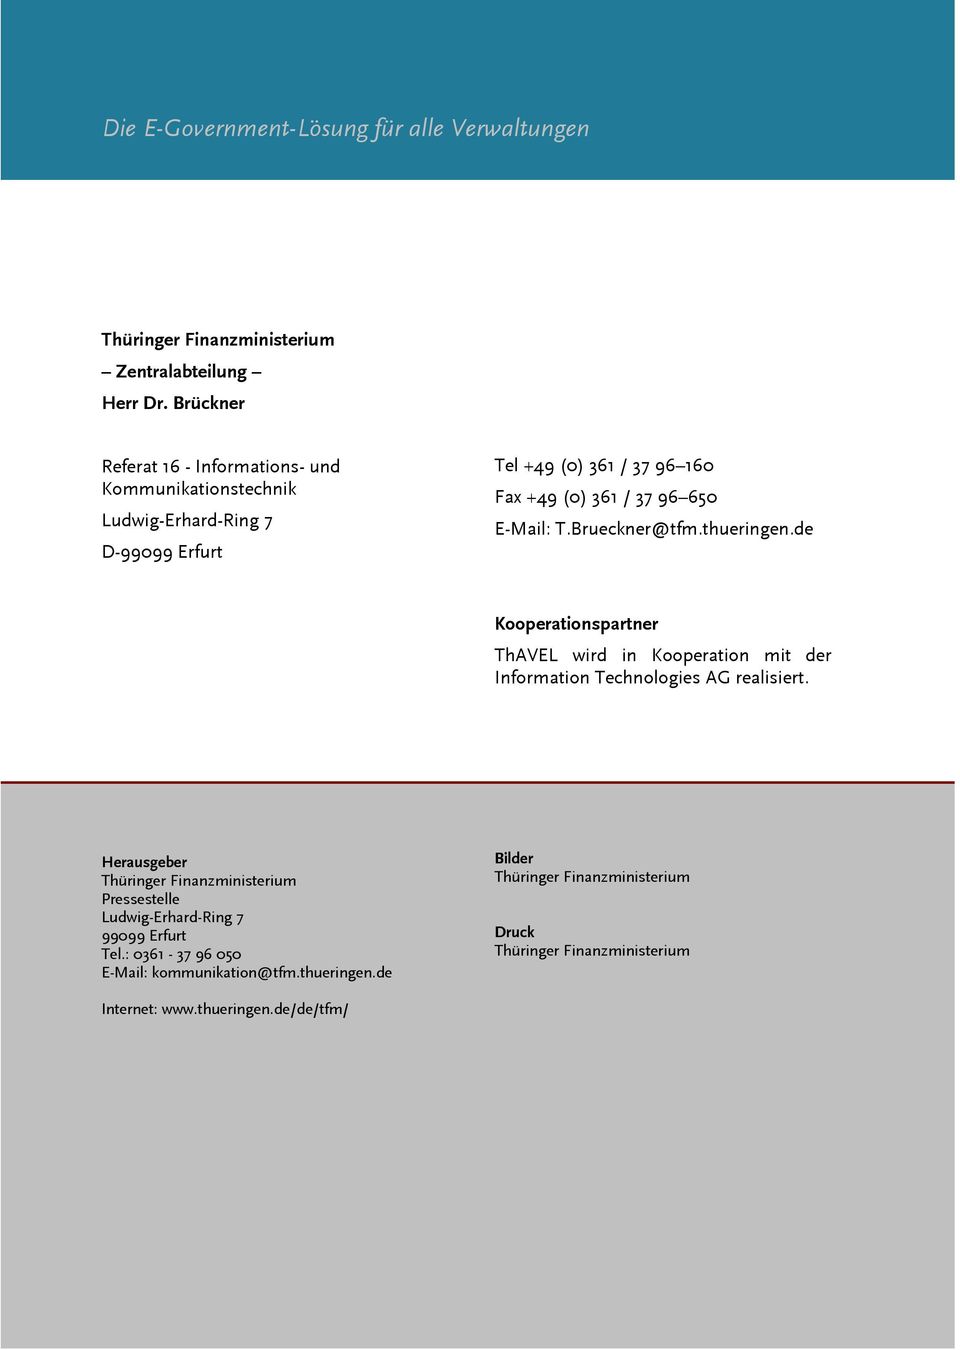 650 E-Mail: T.Brueckner@tfm.thueringen.de Kooperationspartner ThAVEL wird in Kooperation mit der Information Technologies AG realisiert.